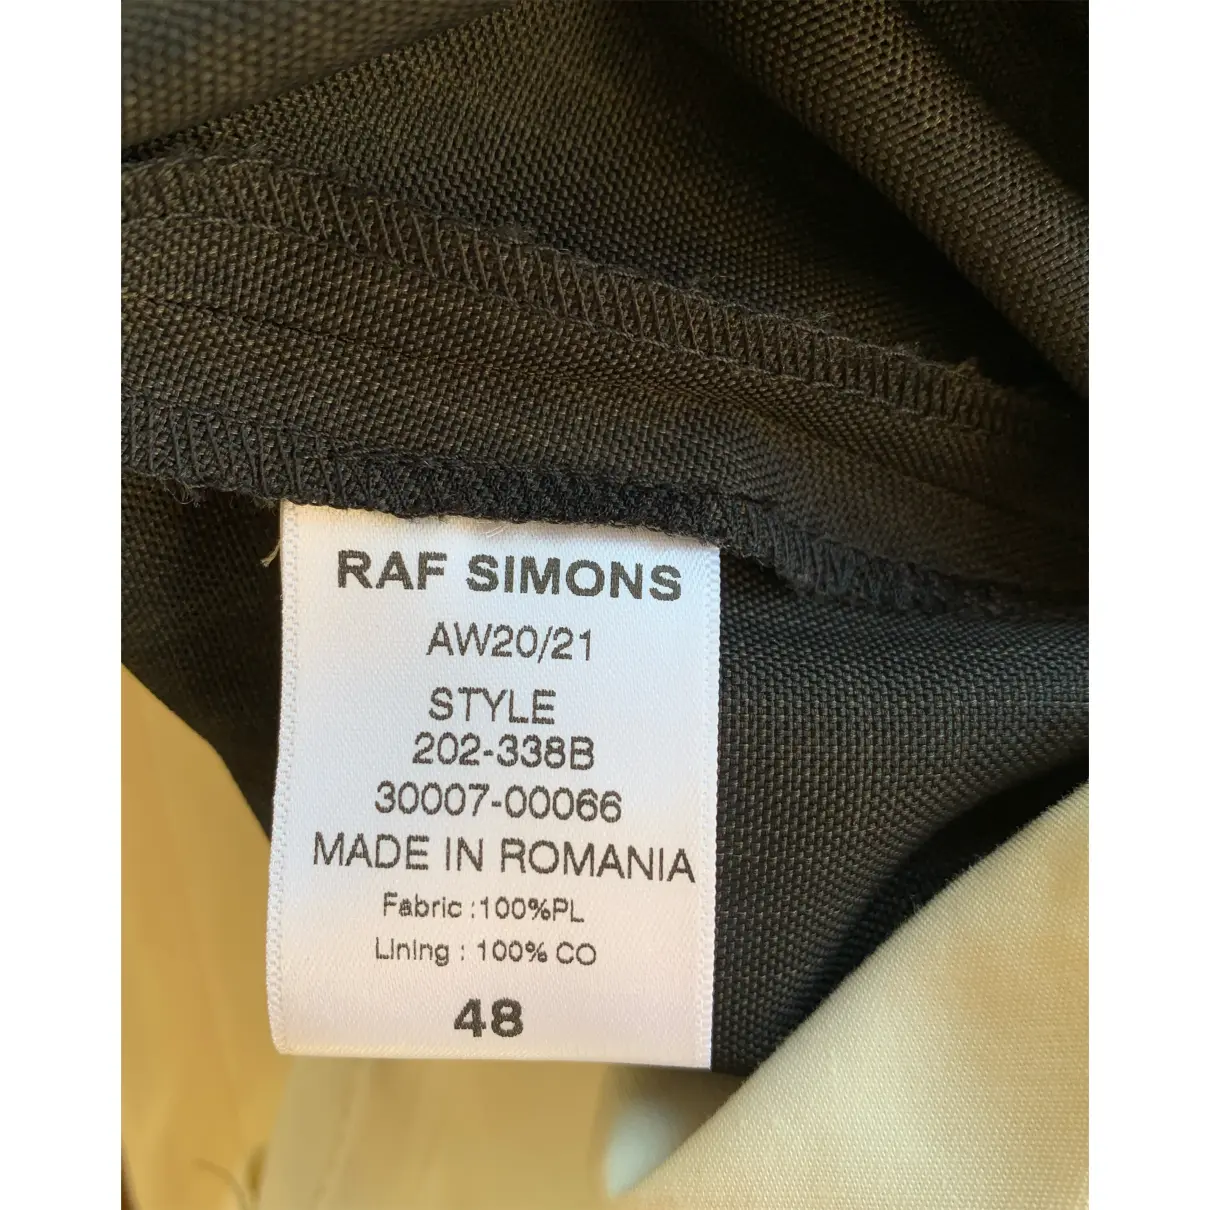 Buy Raf Simons Trousers online